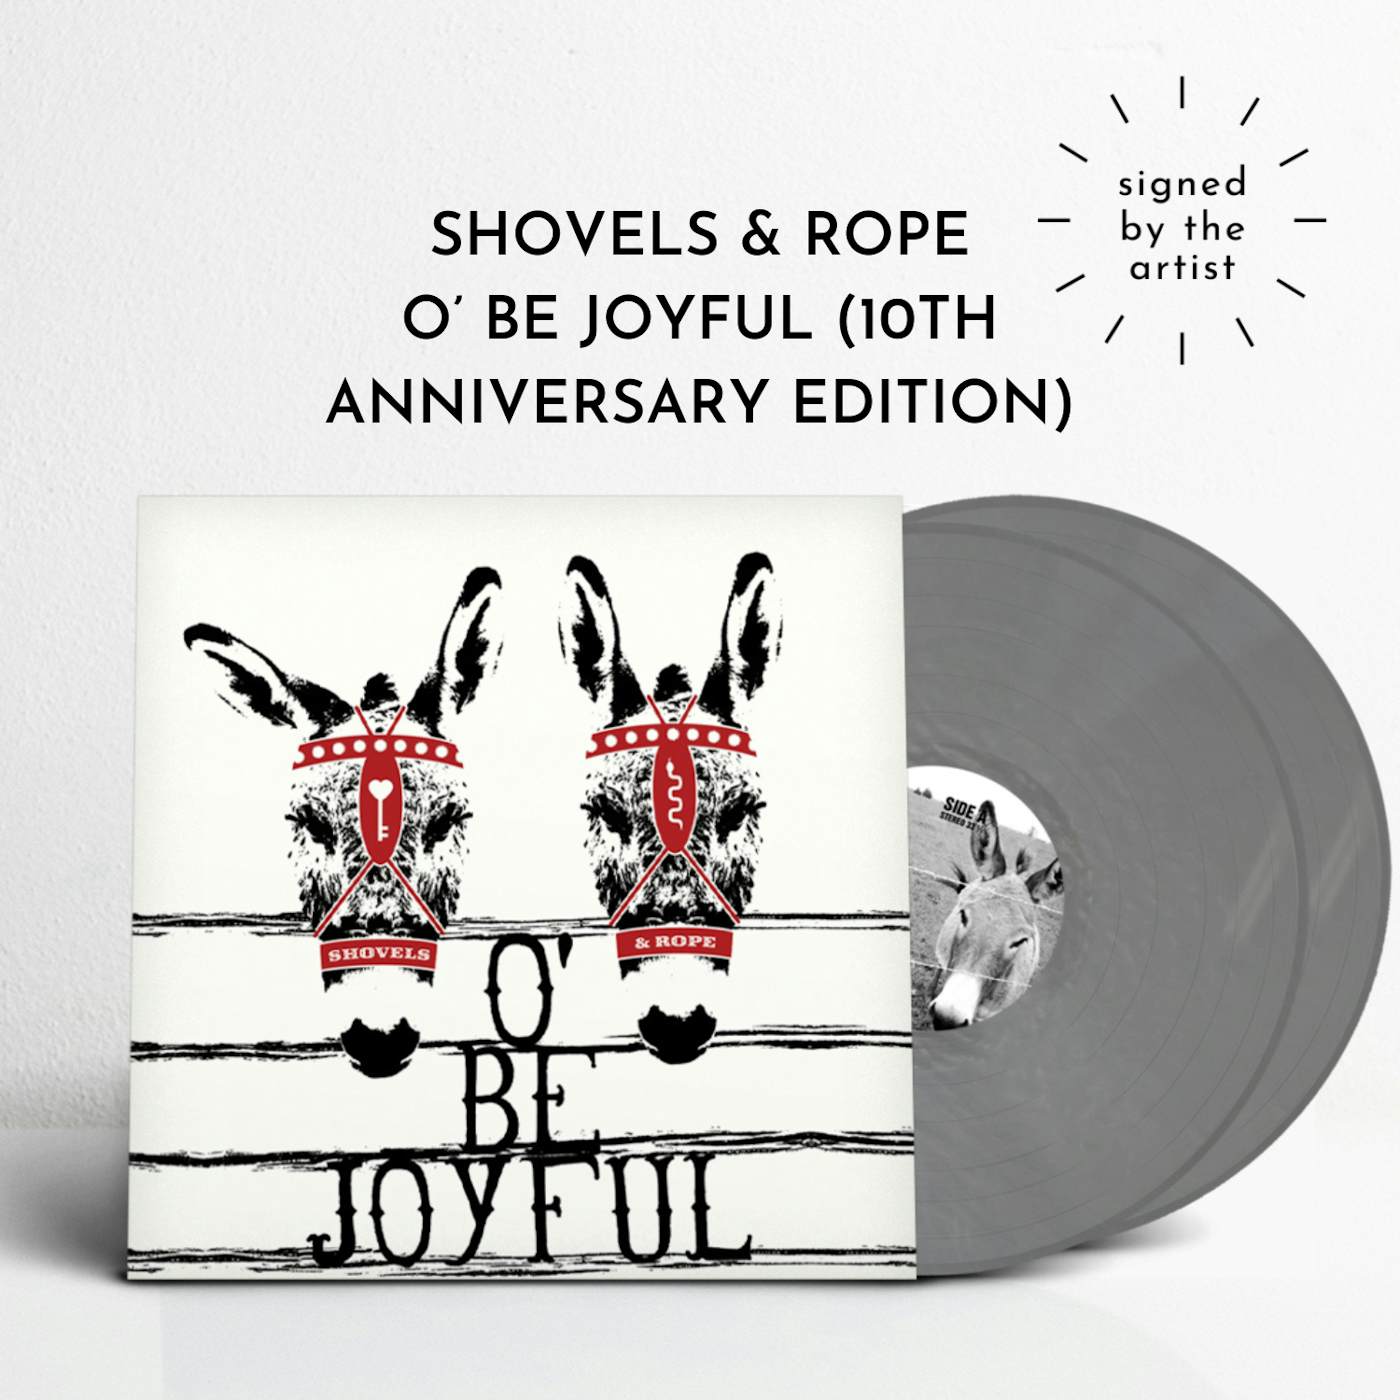 Shovels & Rope O' Be Joyful - 10th Anniversary Edition (SIGNED Ltd. Edition Vinyl)